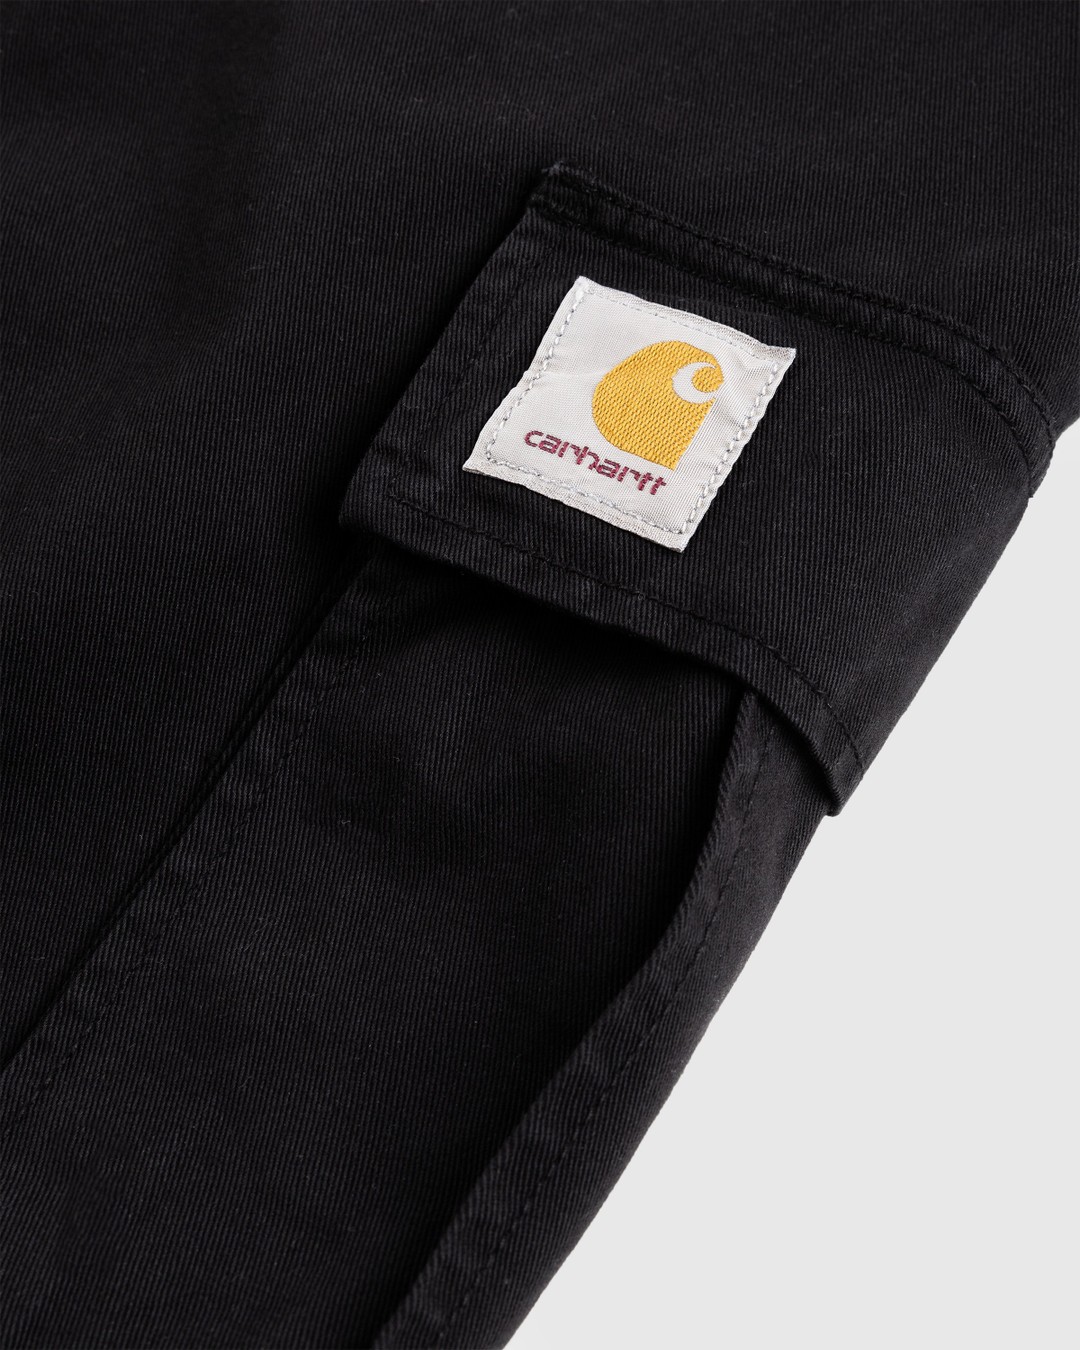 Carhartt WIP – Cole Cargo Short Black - Shorts - Black - Image 5